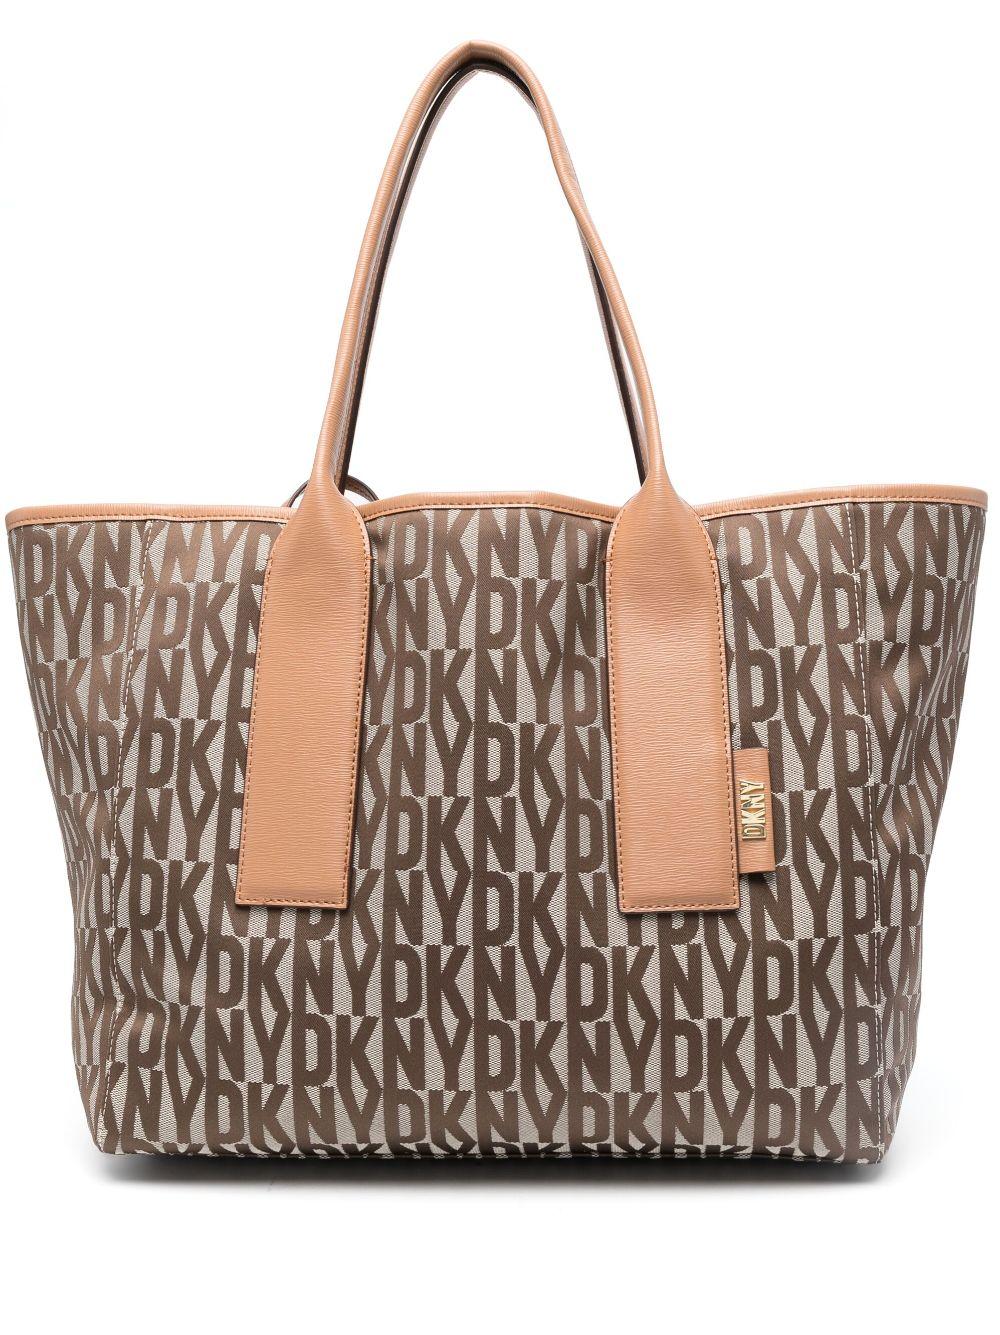 DKNY Grayson Monogram Shopping Bag in Brown